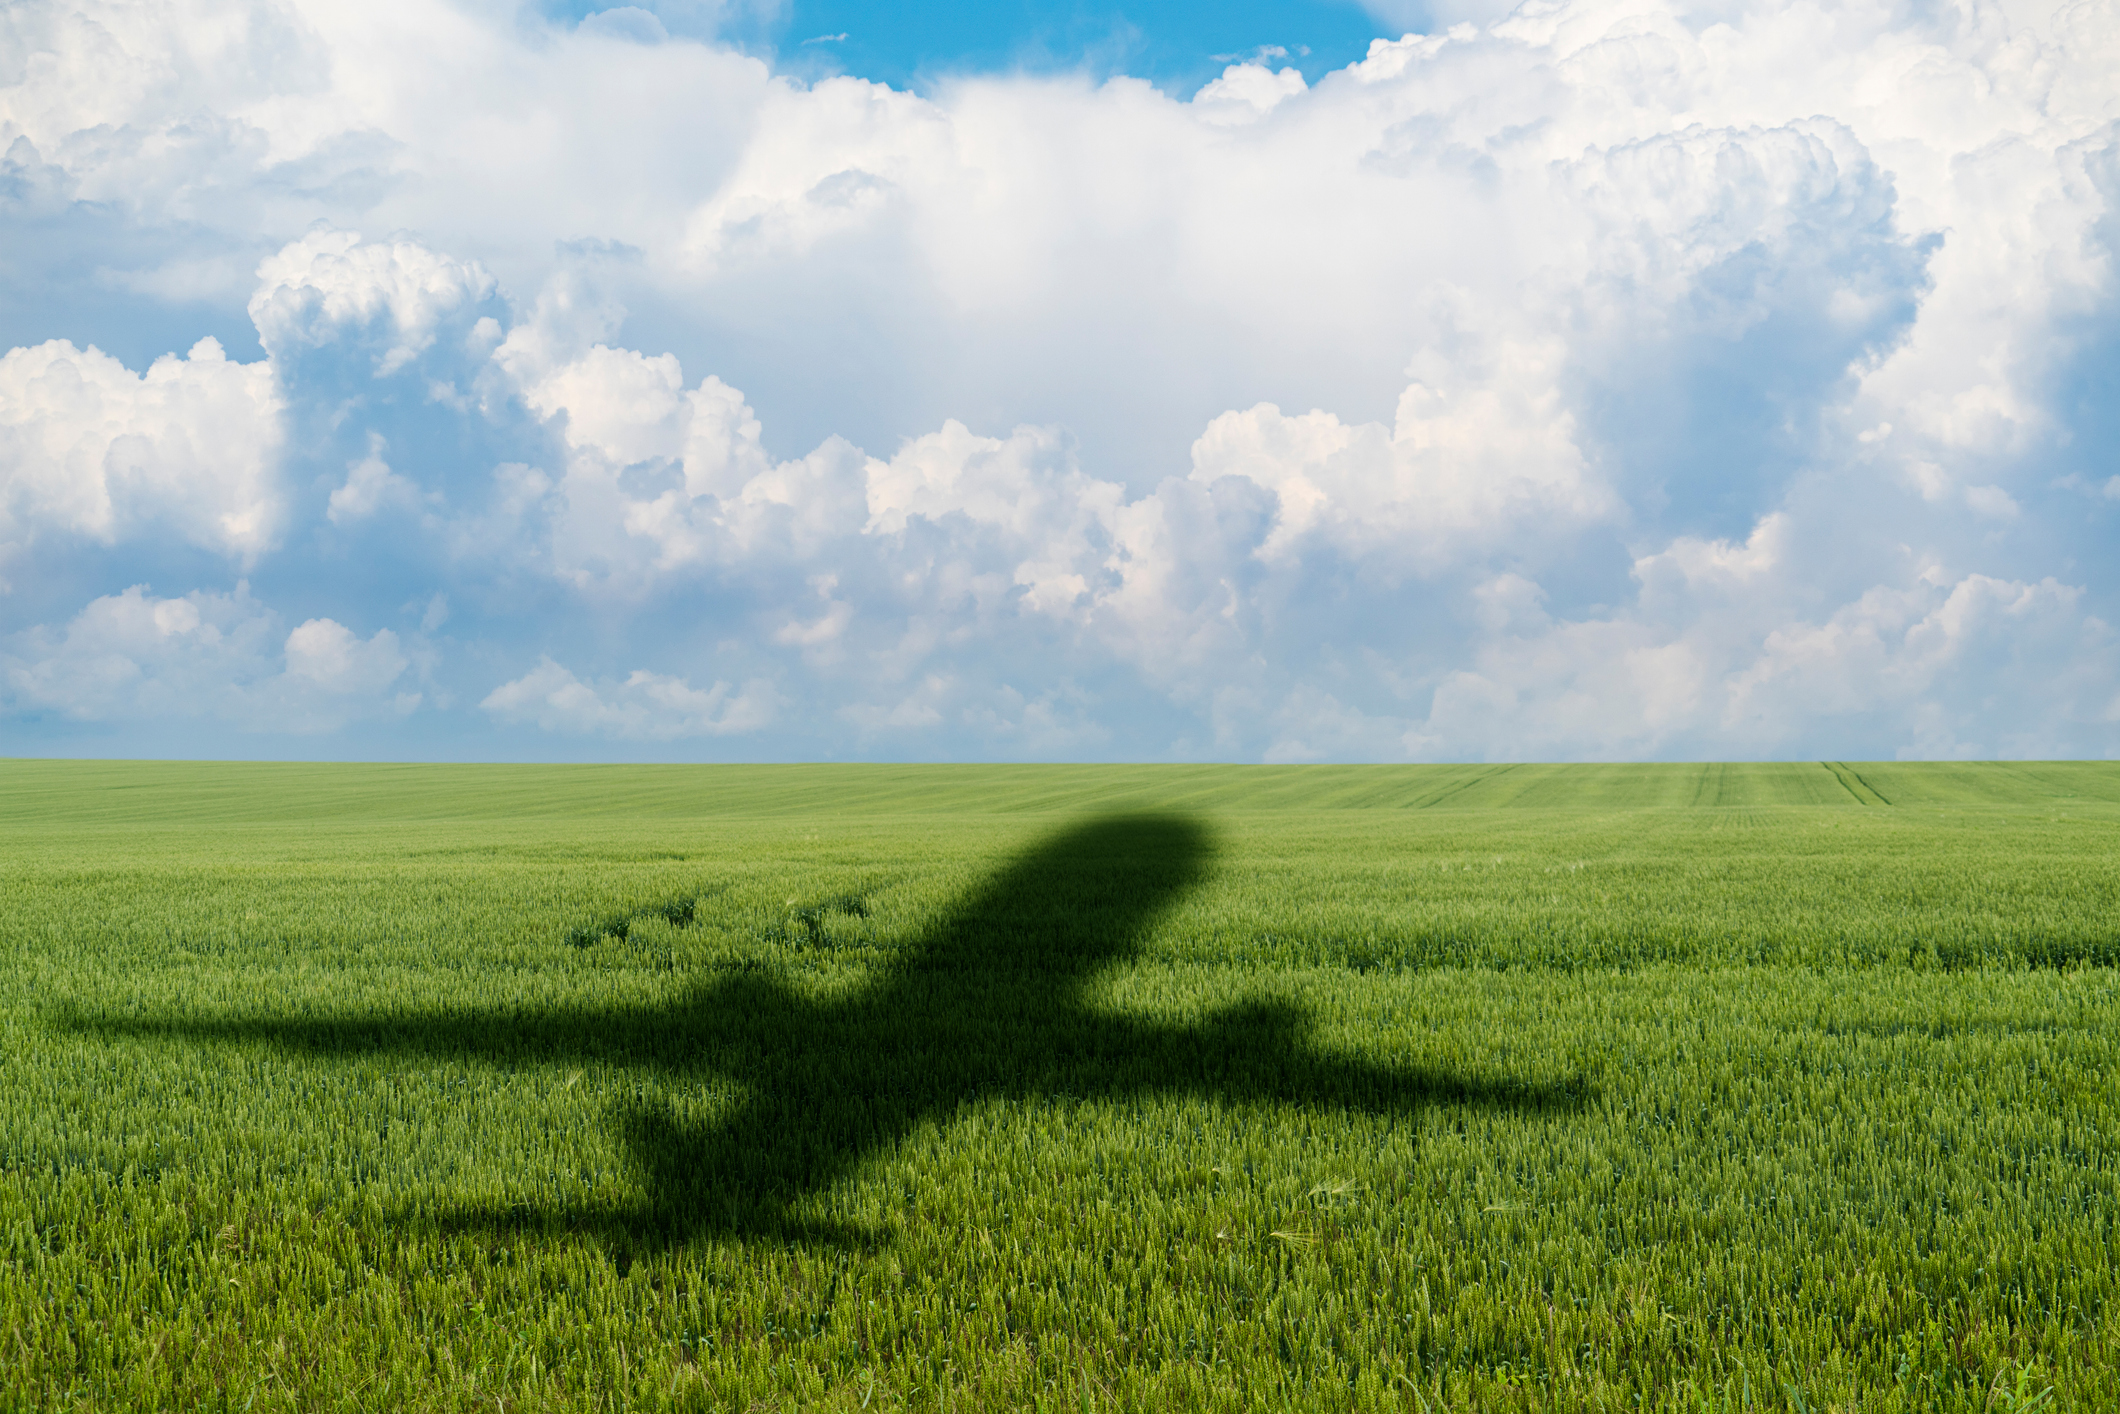 Shadow of the plane on the agricultural field. (Photo: iStock - Scharfsinn86)